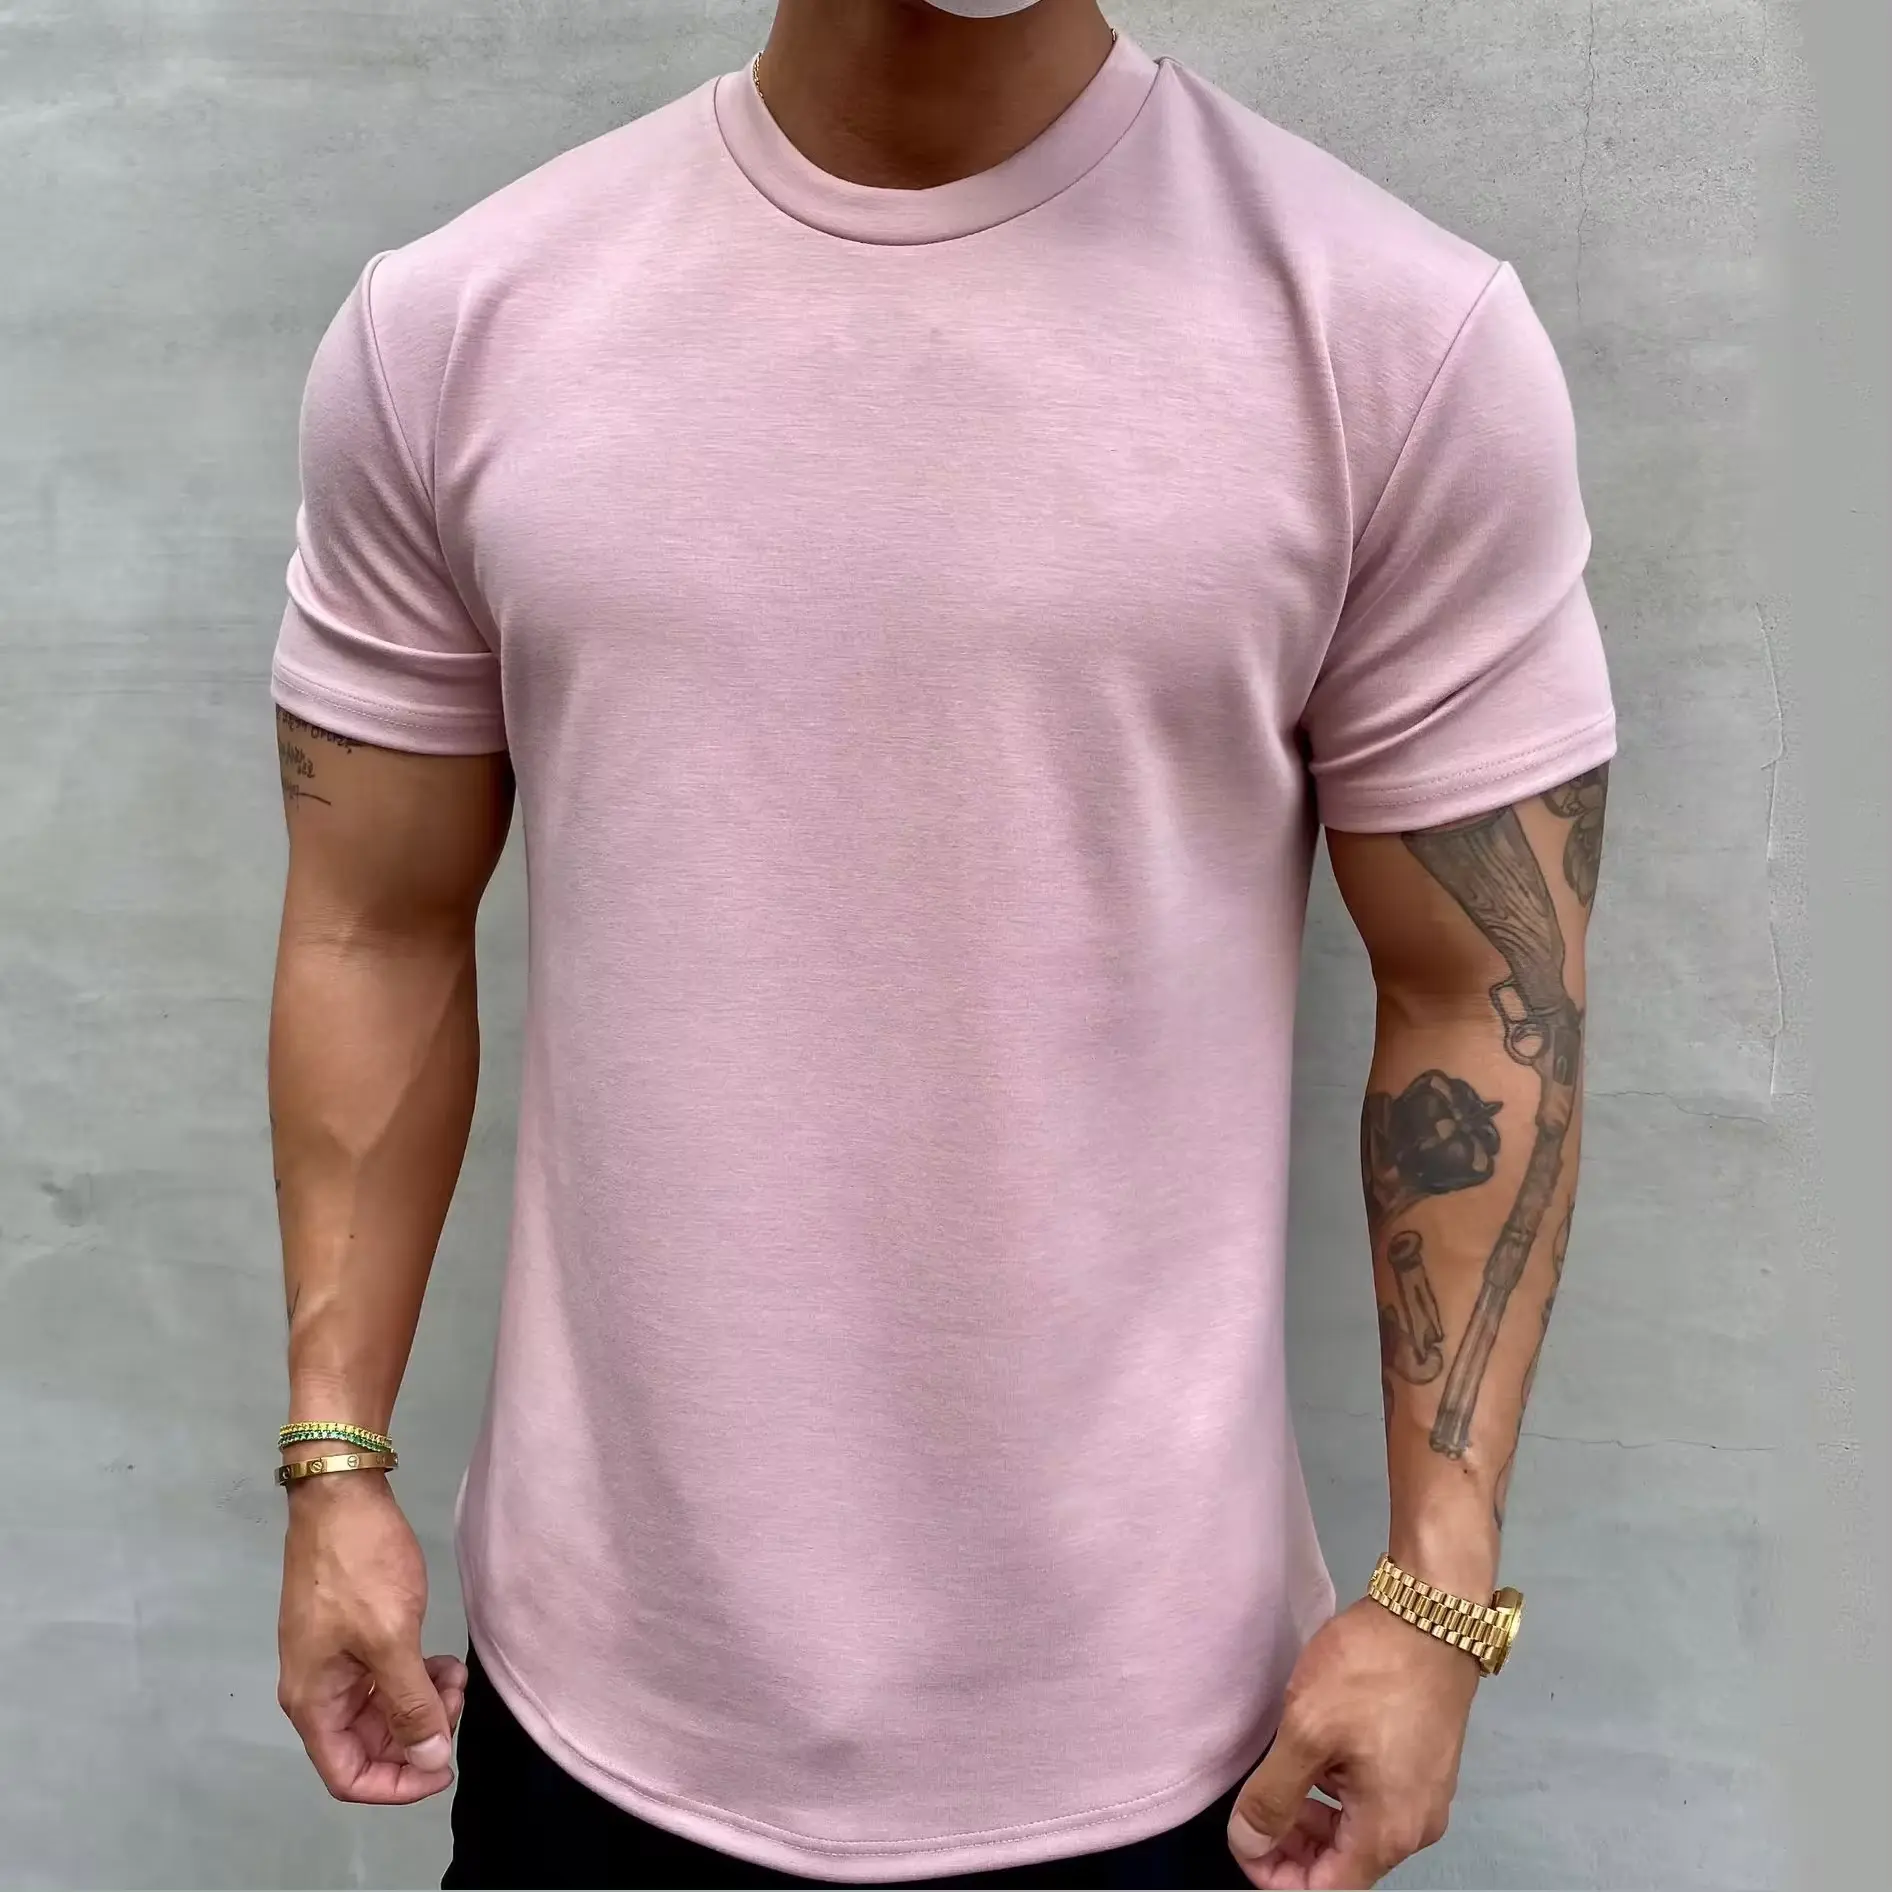 Kaus gym lengan pendek pria, kaus katun spandex teeshirt, kaus gym polos ukuran besar, kaus desainer grosir untuk pria